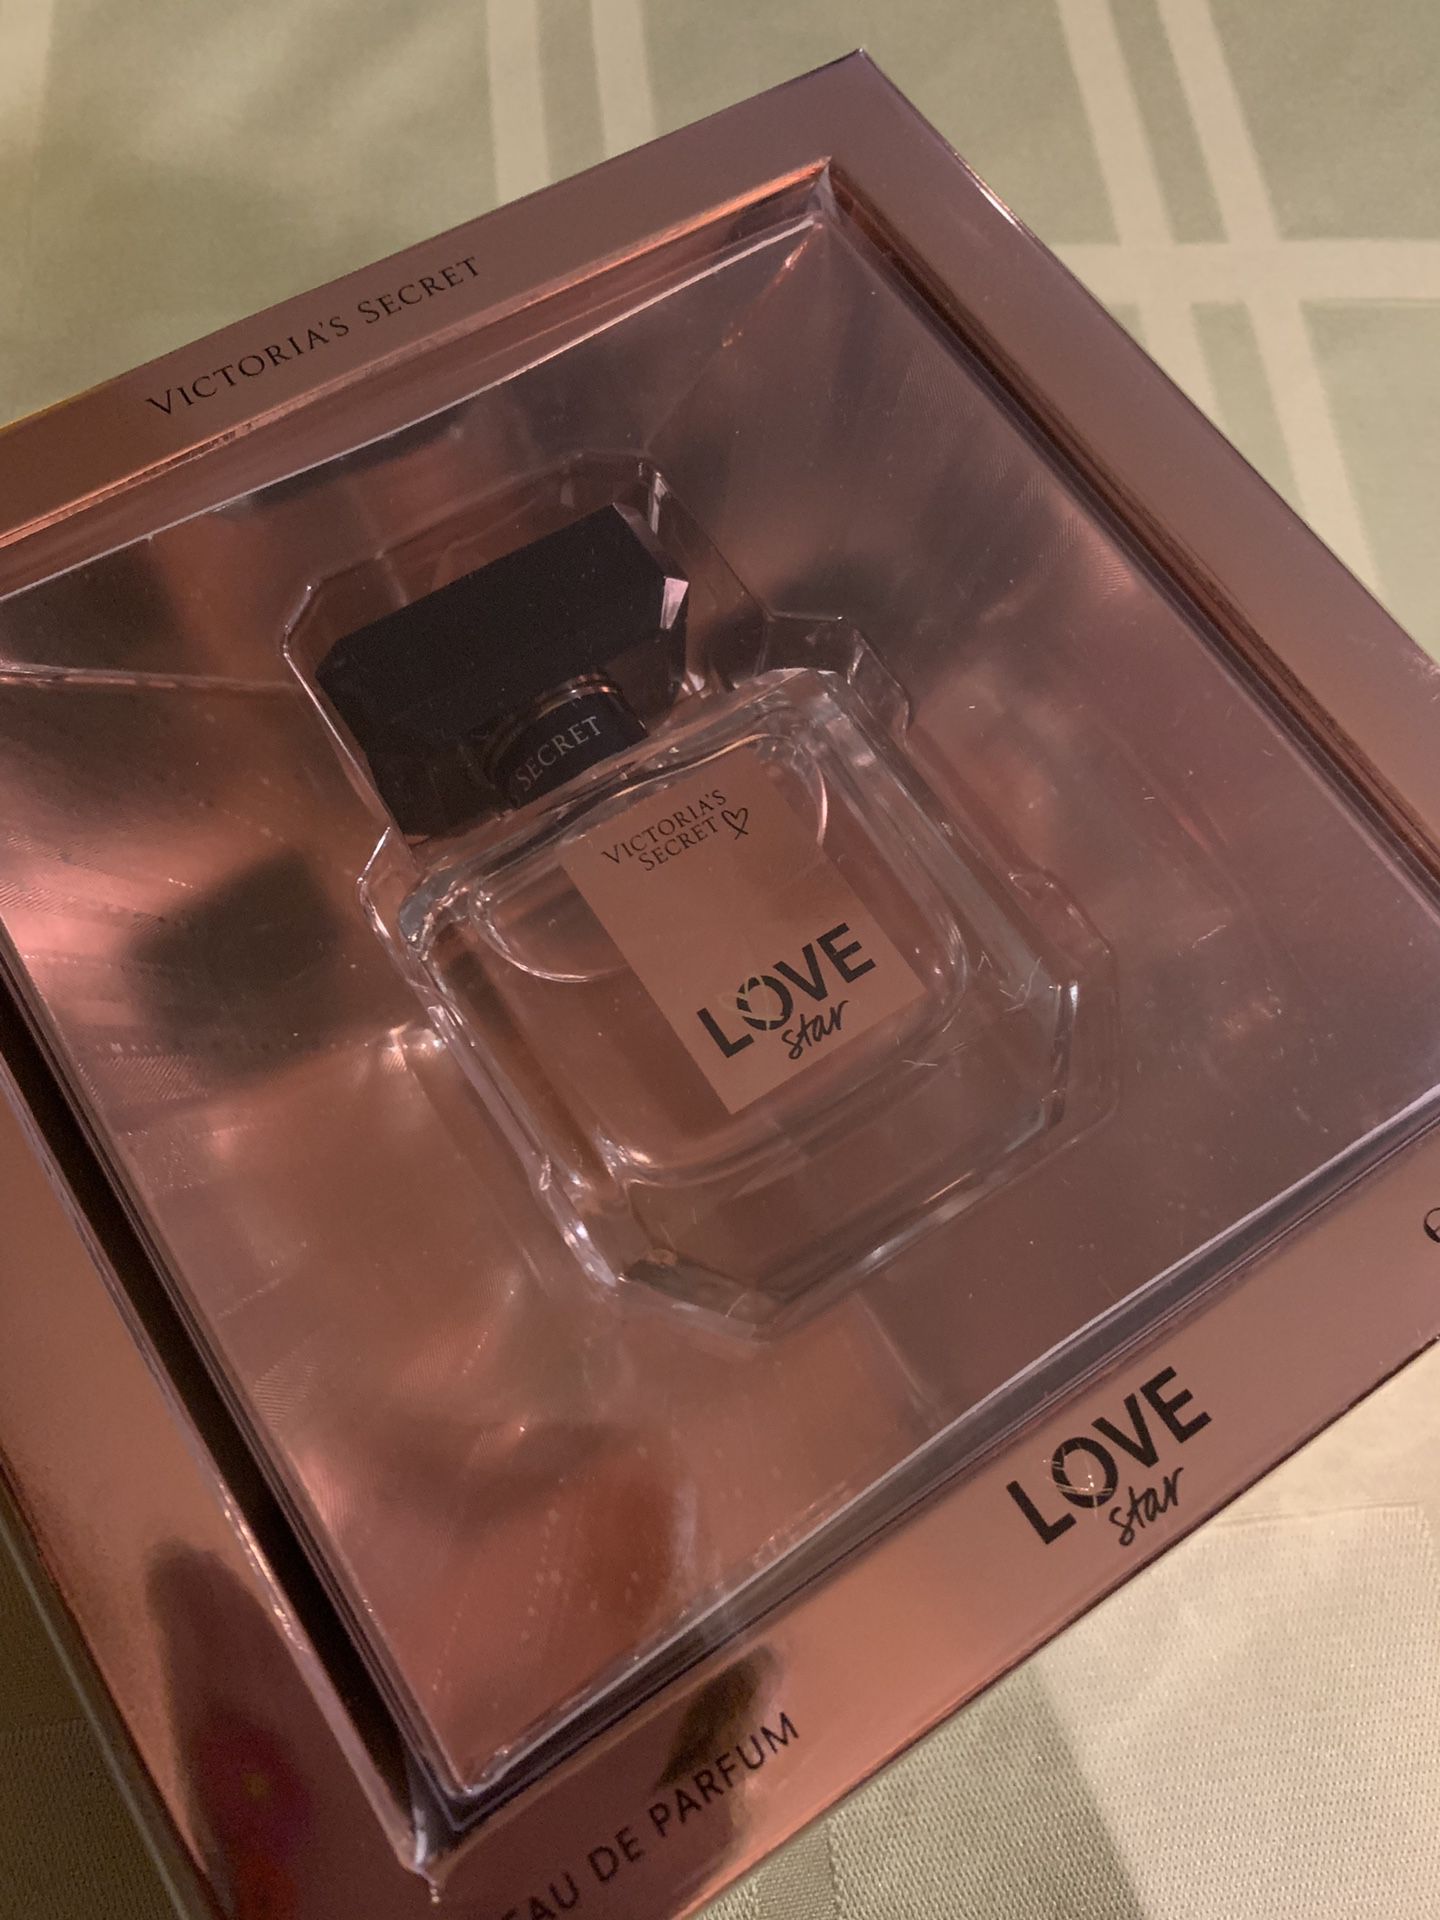 Victoria’s Secret Love Star perfume